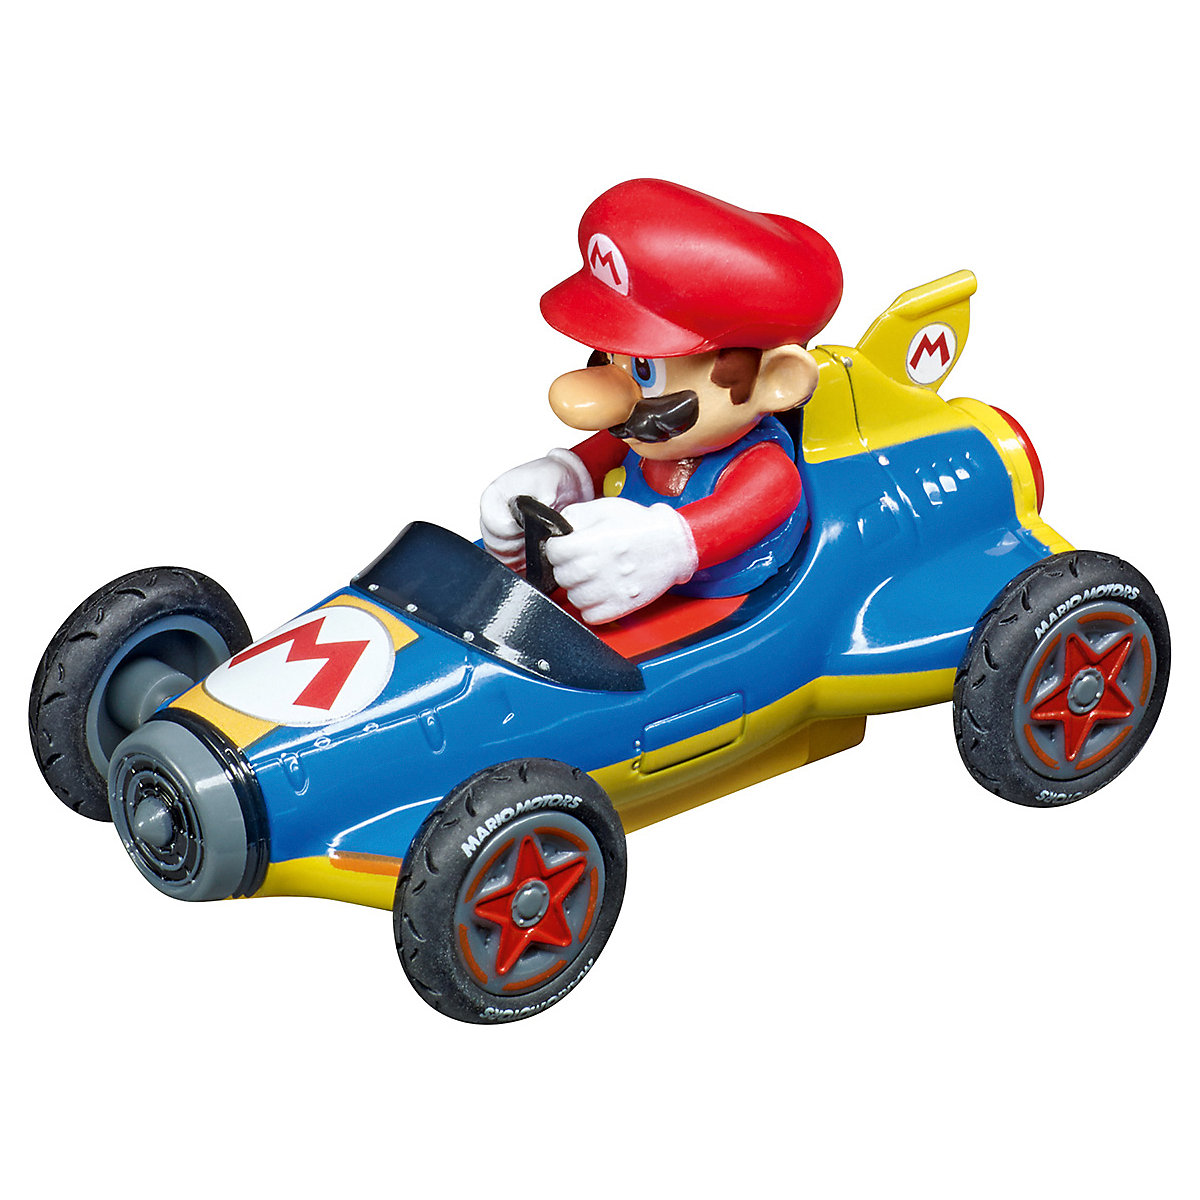 Nintendo Mario Kart Mach 8 inkl. Gratis Nintendo Mario